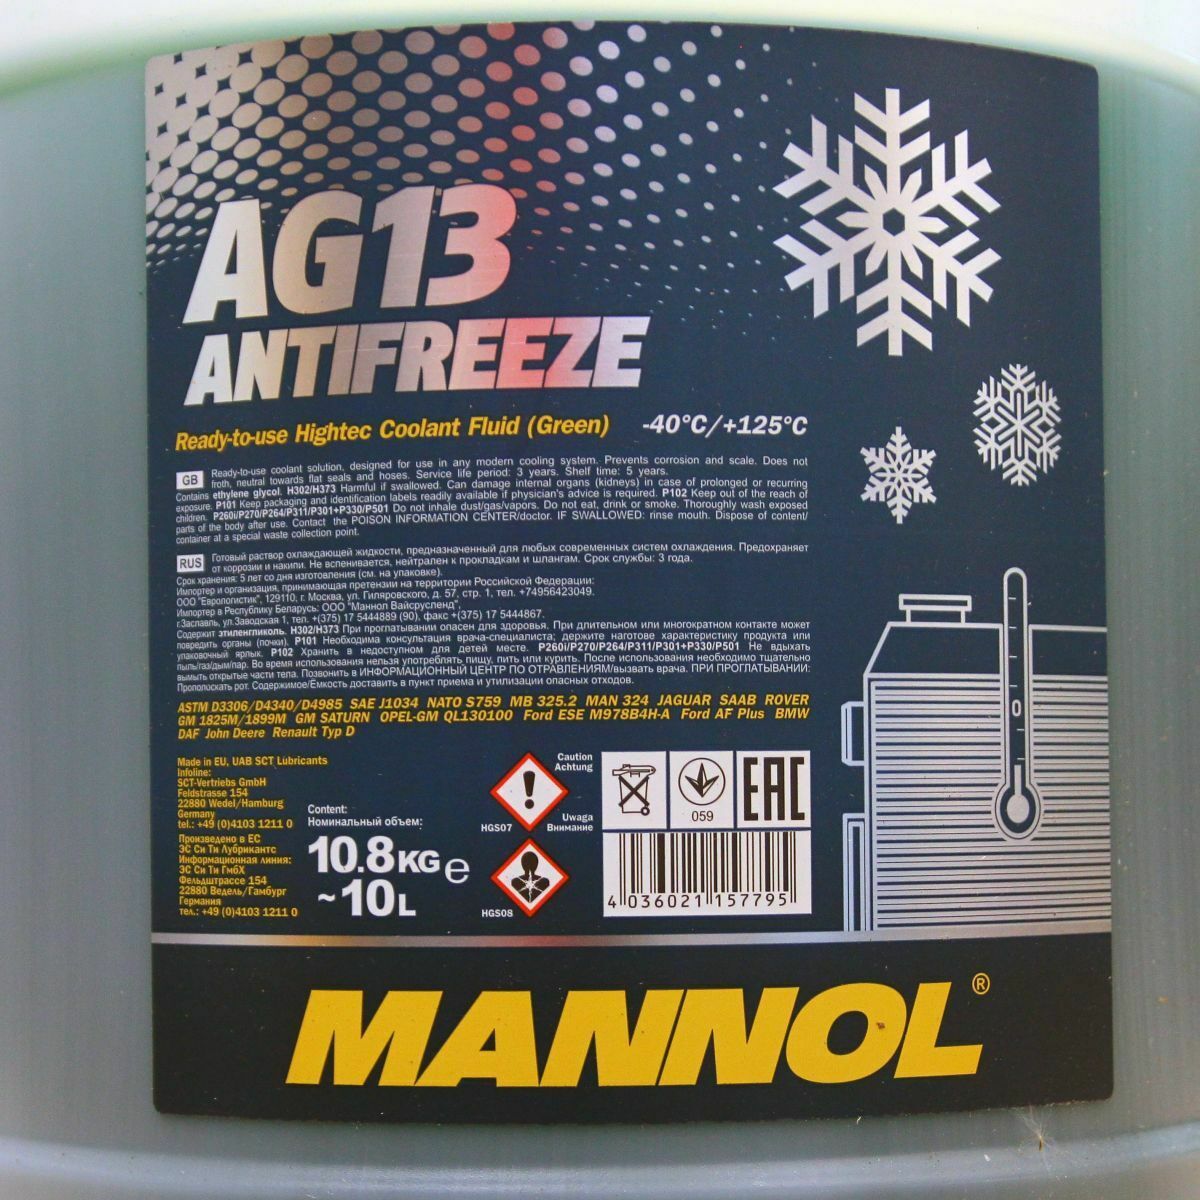 30 Liter (3x10) MANNOL hightech Antifreeze AG13 Frostschutz Fertiggemisch grün -40°C G13